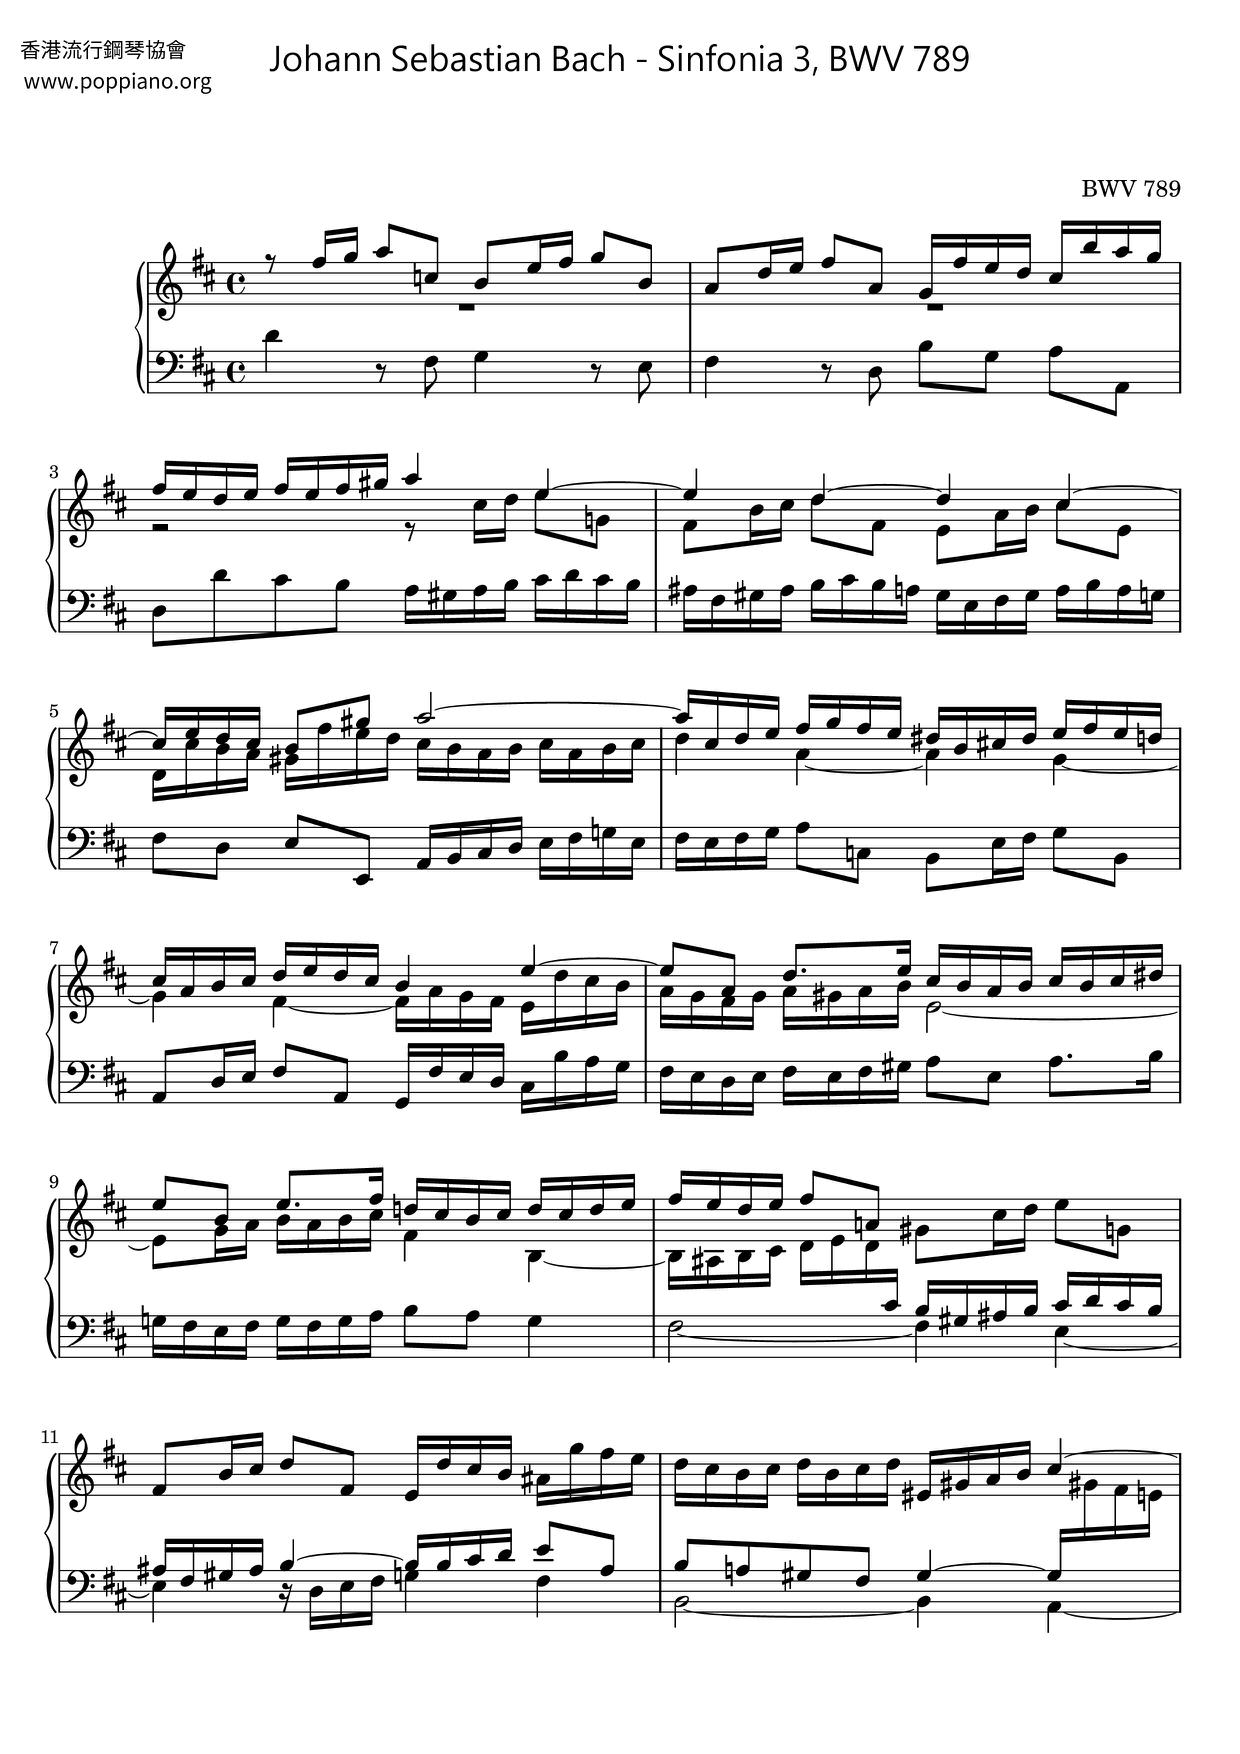 Sinfonia 3, BWV 789 Score